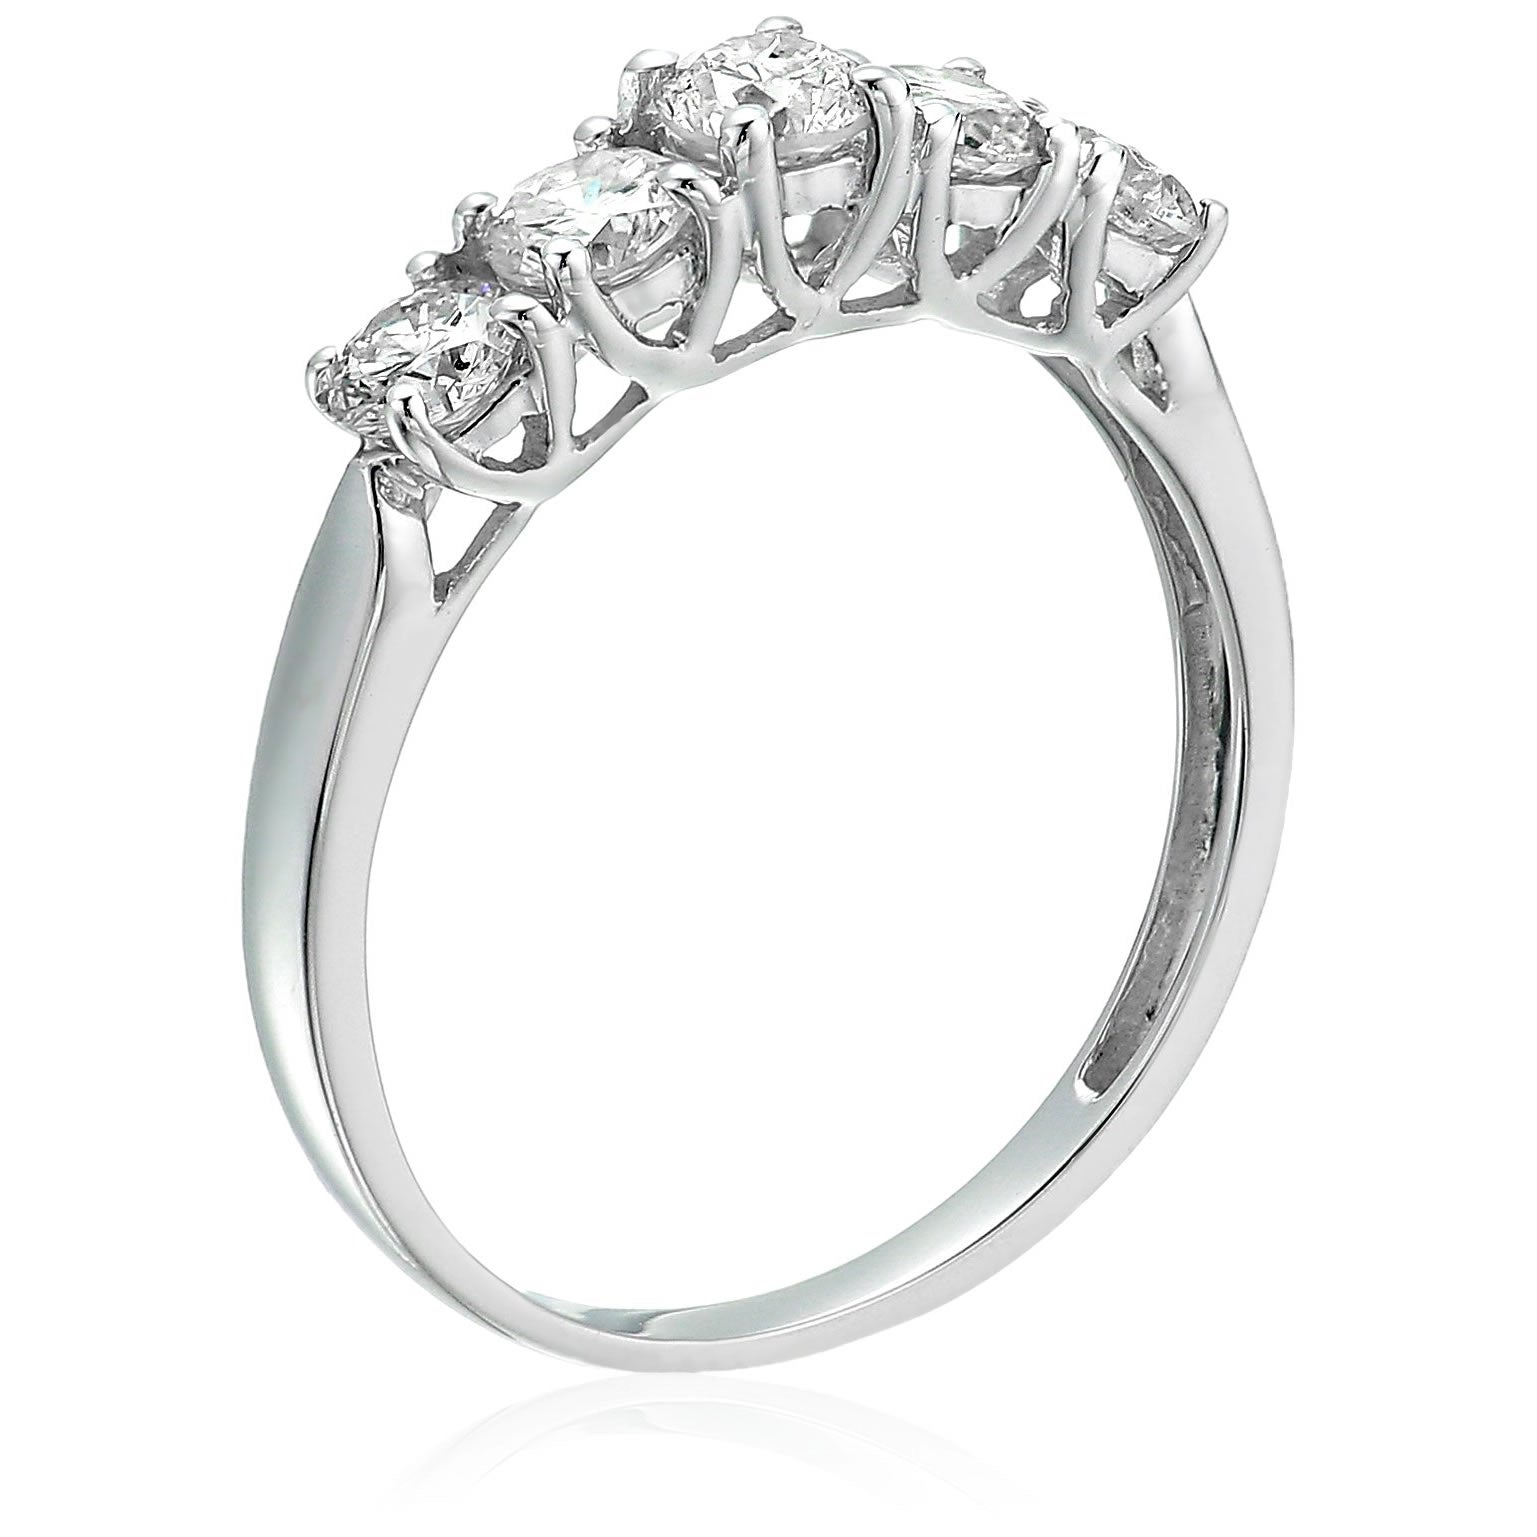 1 cttw Certified I1-I2 5-Stone Diamond Ring 14K White Gold Engagement